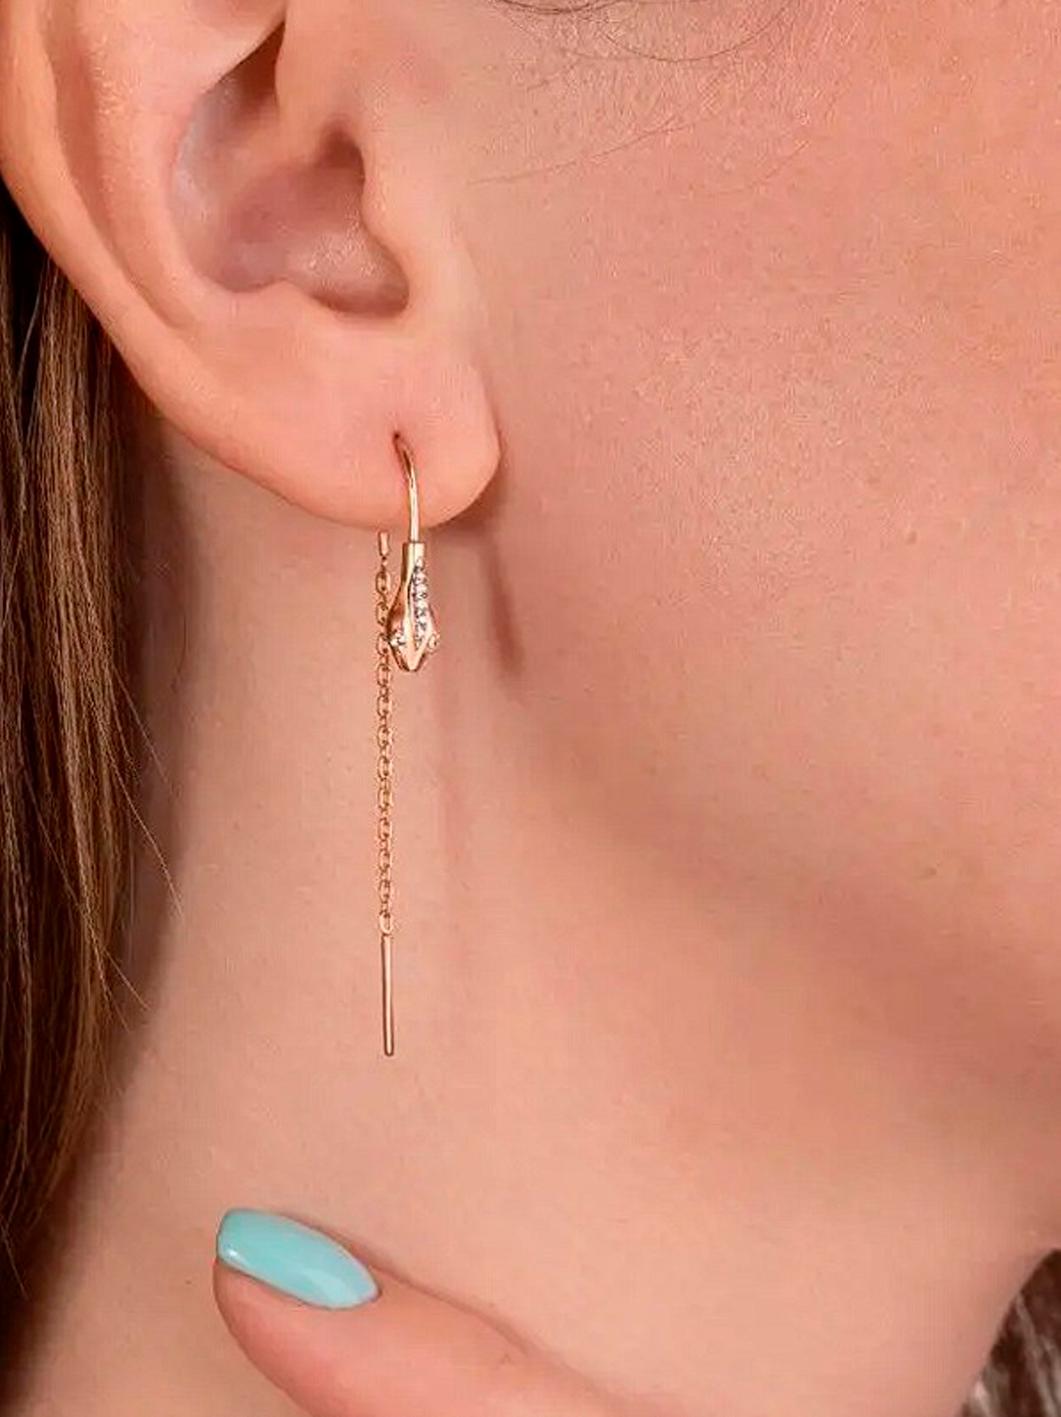 14k Gold Threader Snake Earrings. Gold Drop Earring Gold Chain Earrings. Long Drop Gold Earrings. Modern Earrings 14k gold earrings. Snake Threader Earrings. Animal threader earrings. Gold Chain Dangle Earrings.
Beautiful earrings for everyday